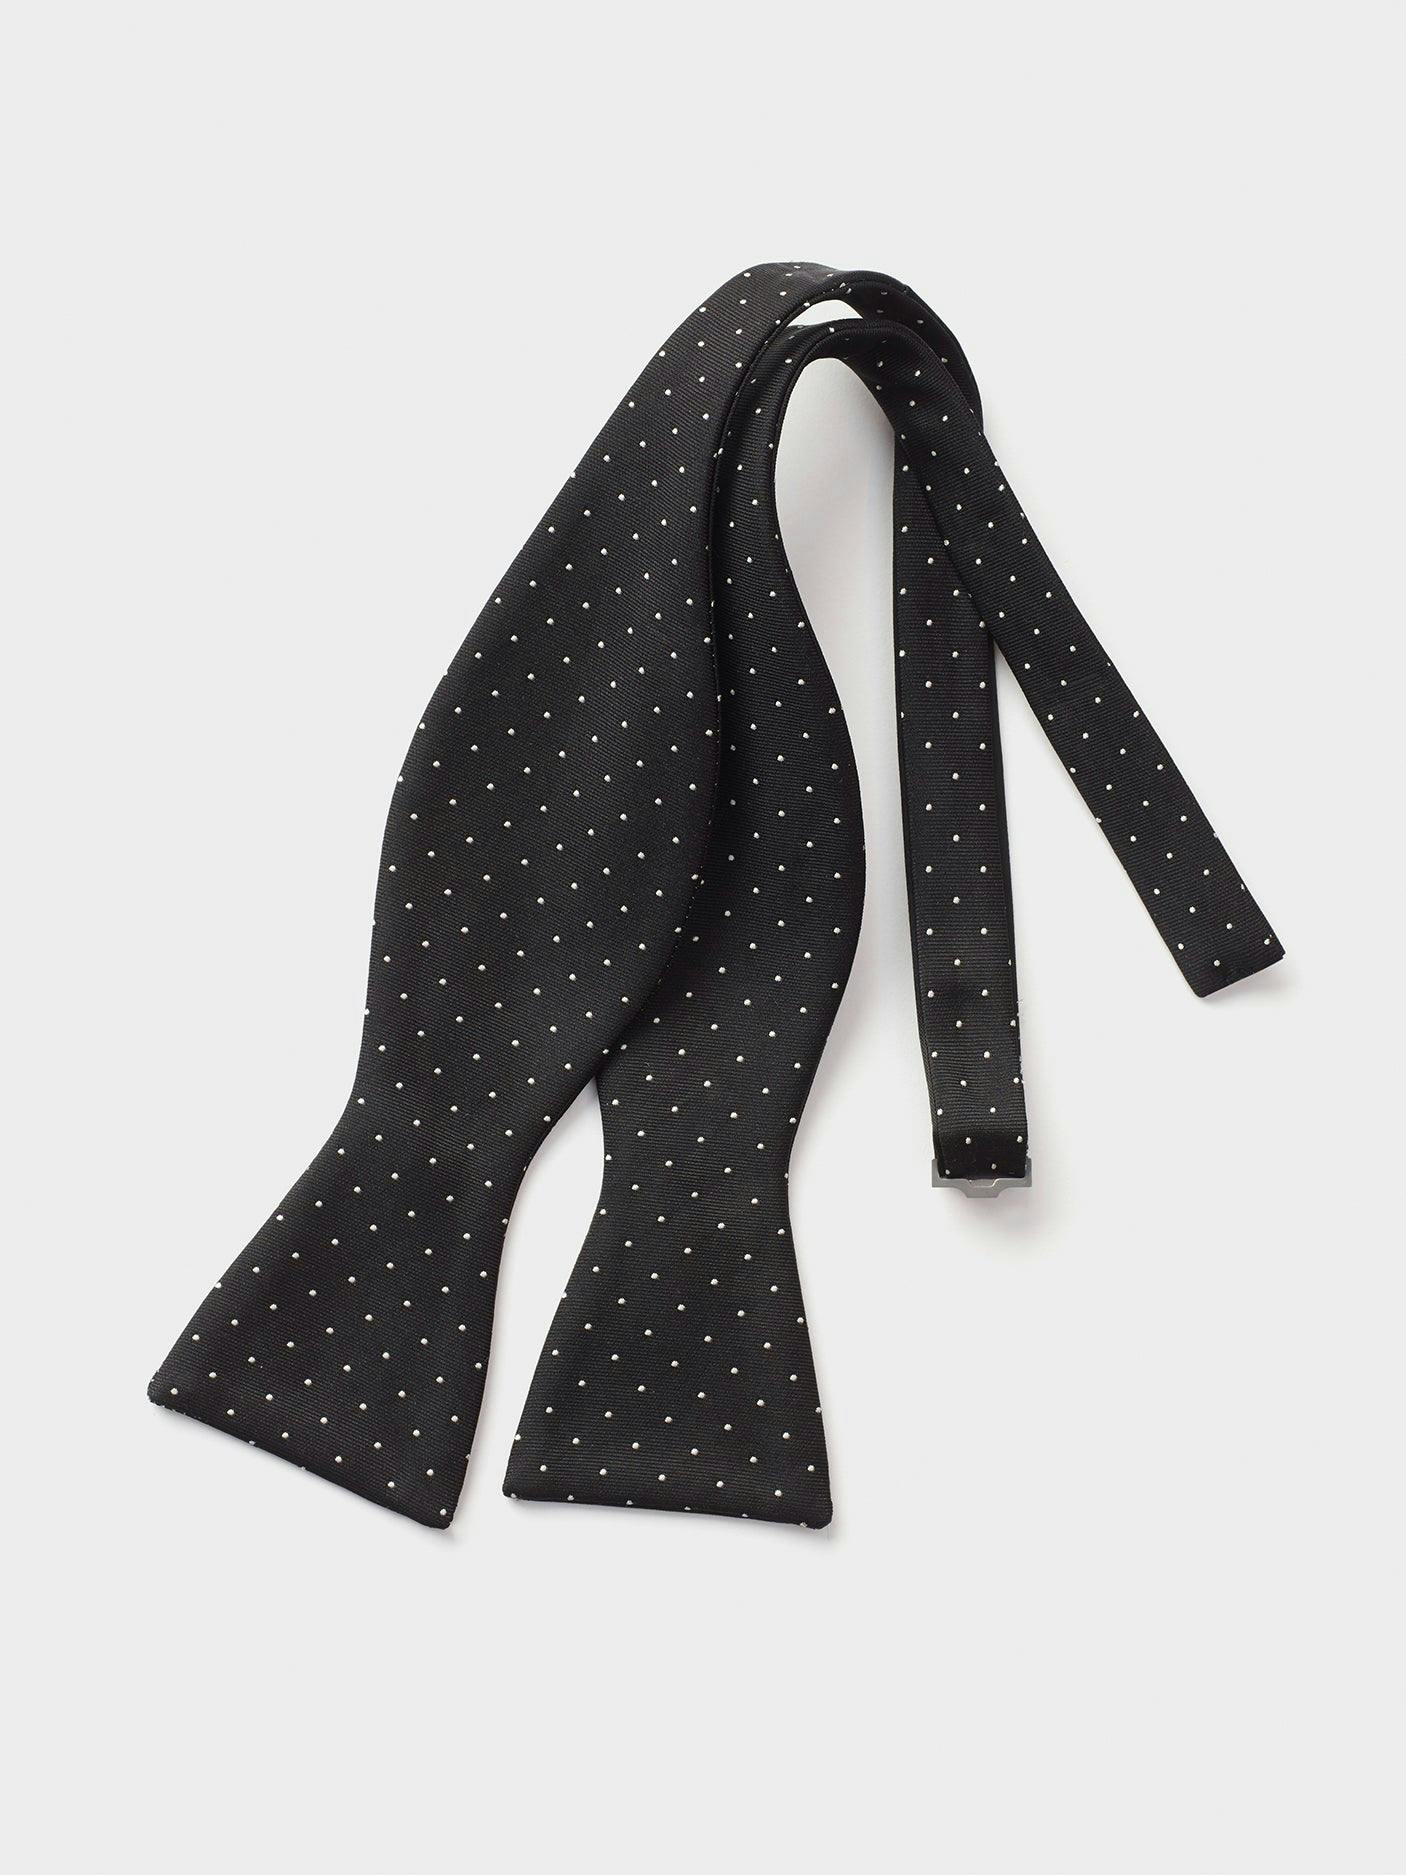 Black Pindot Silk Bow Tie